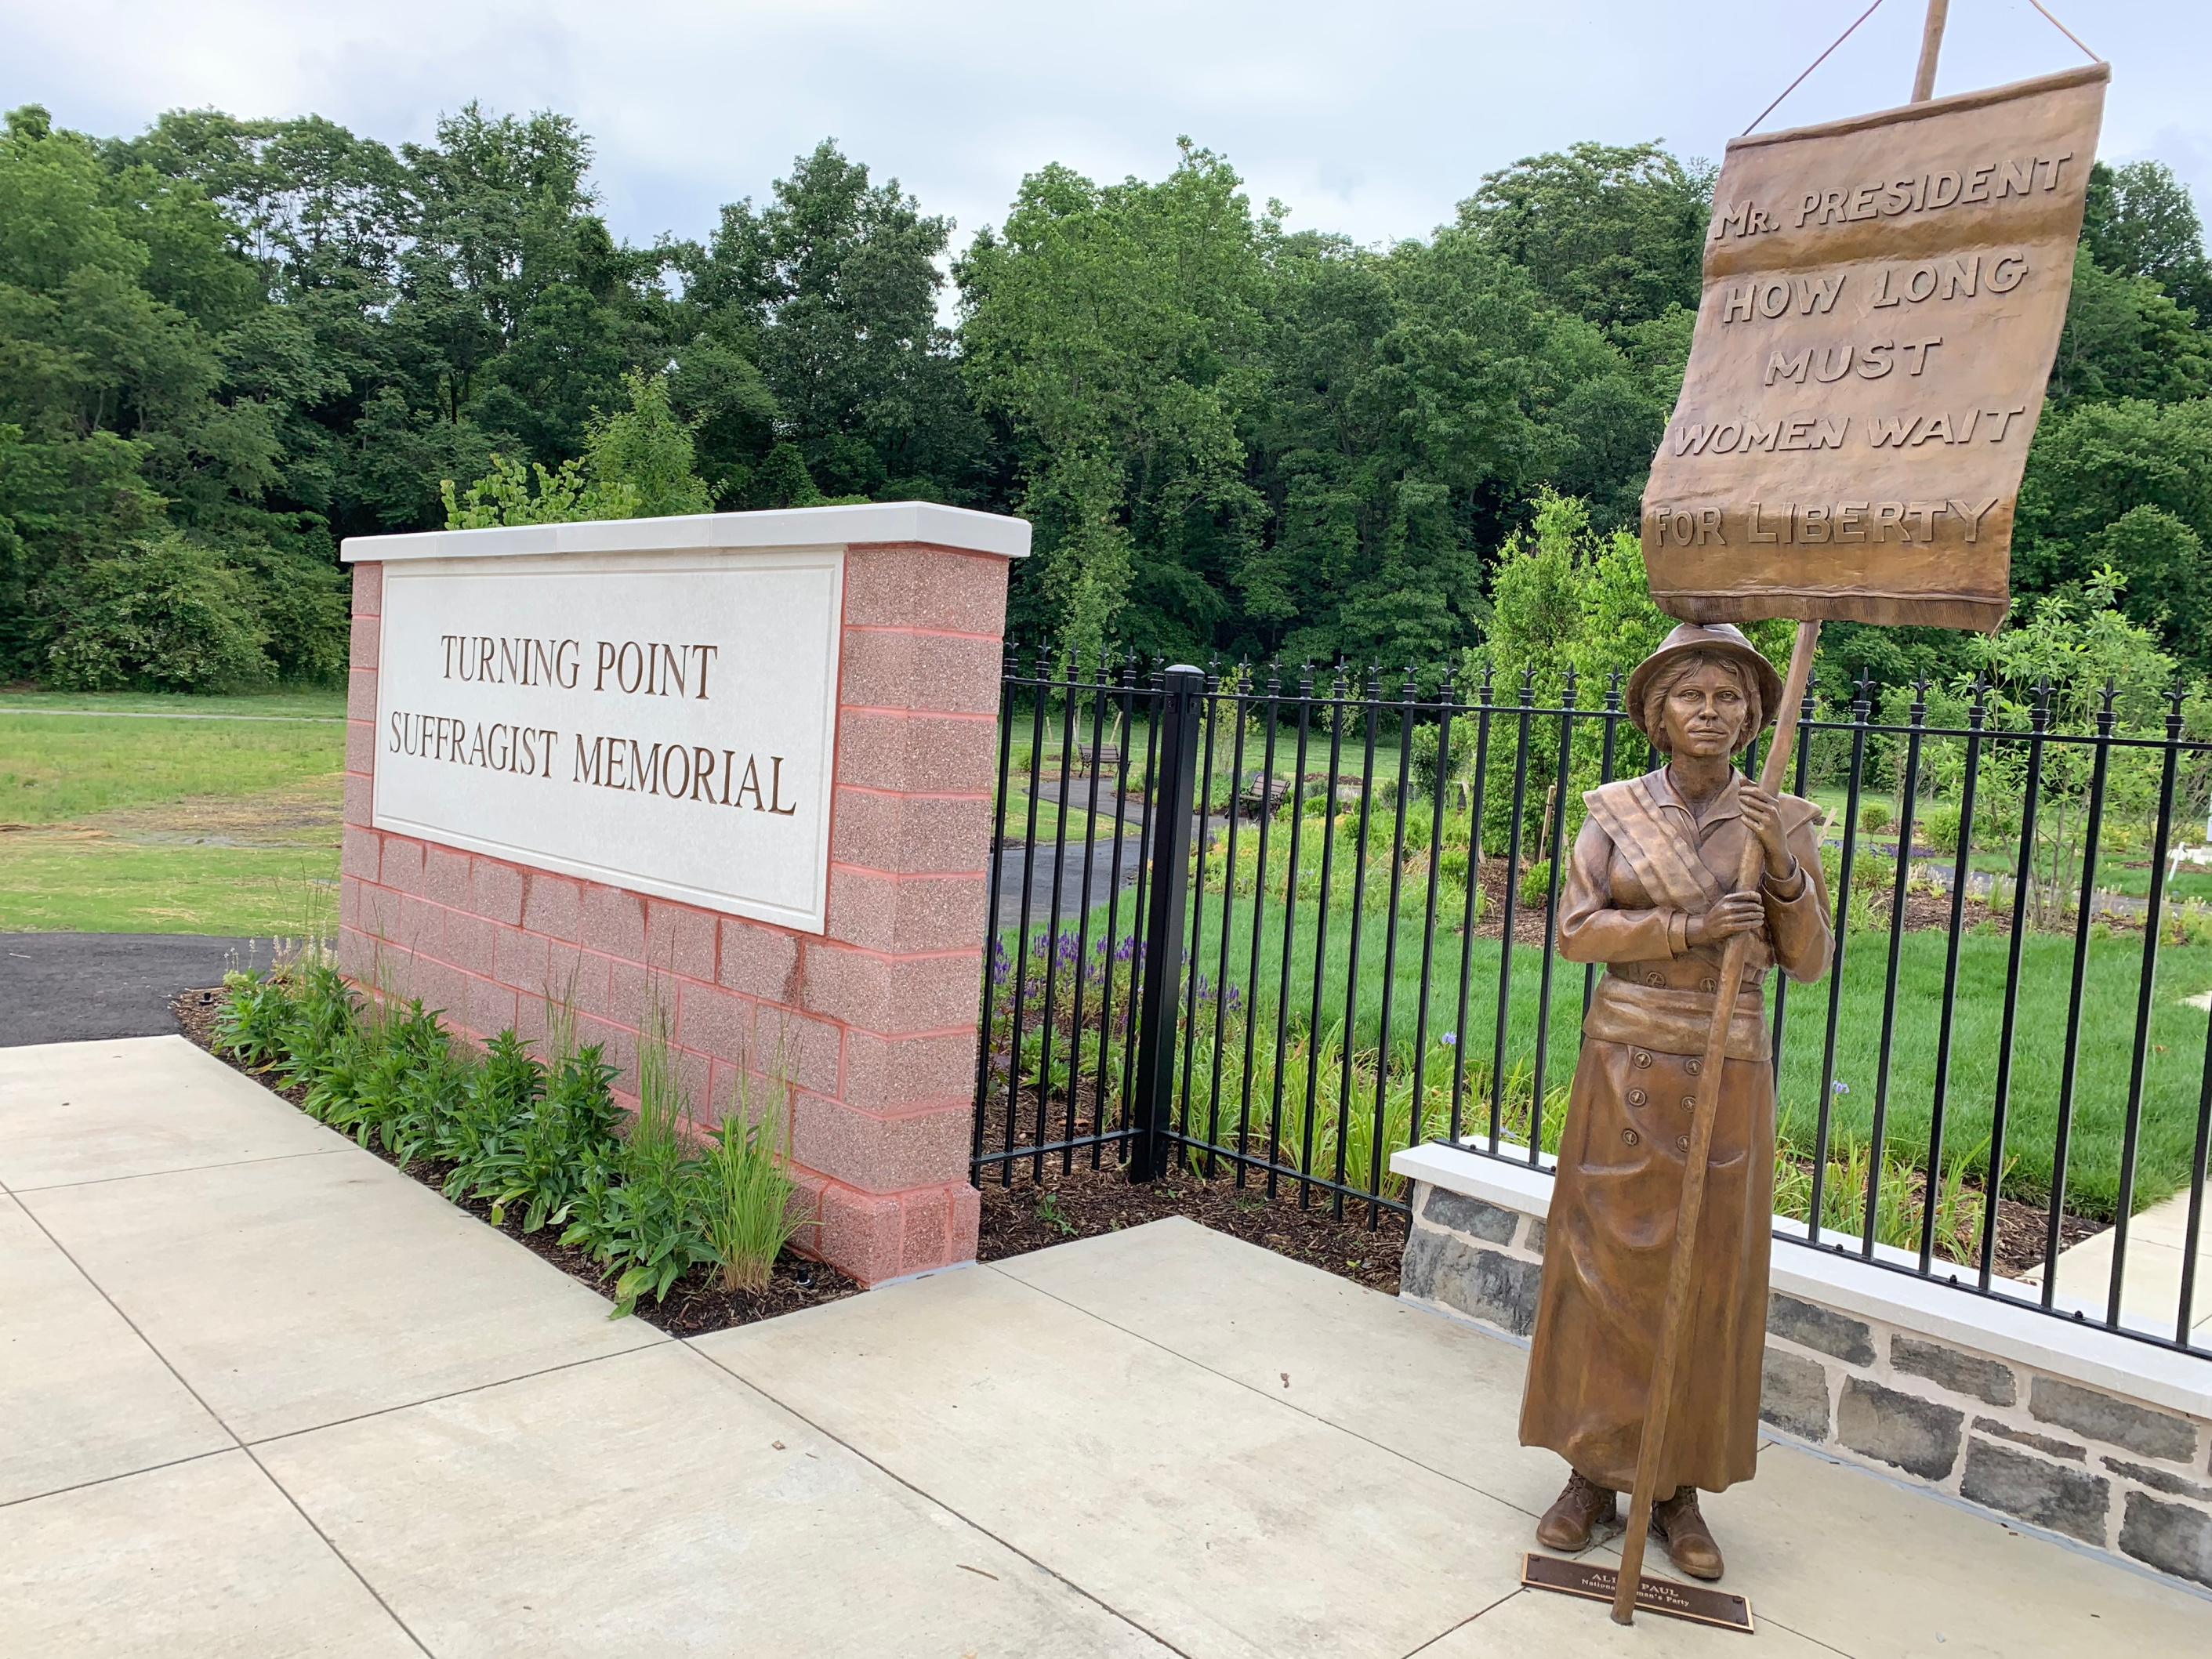 Turning point Suffragist Memorial